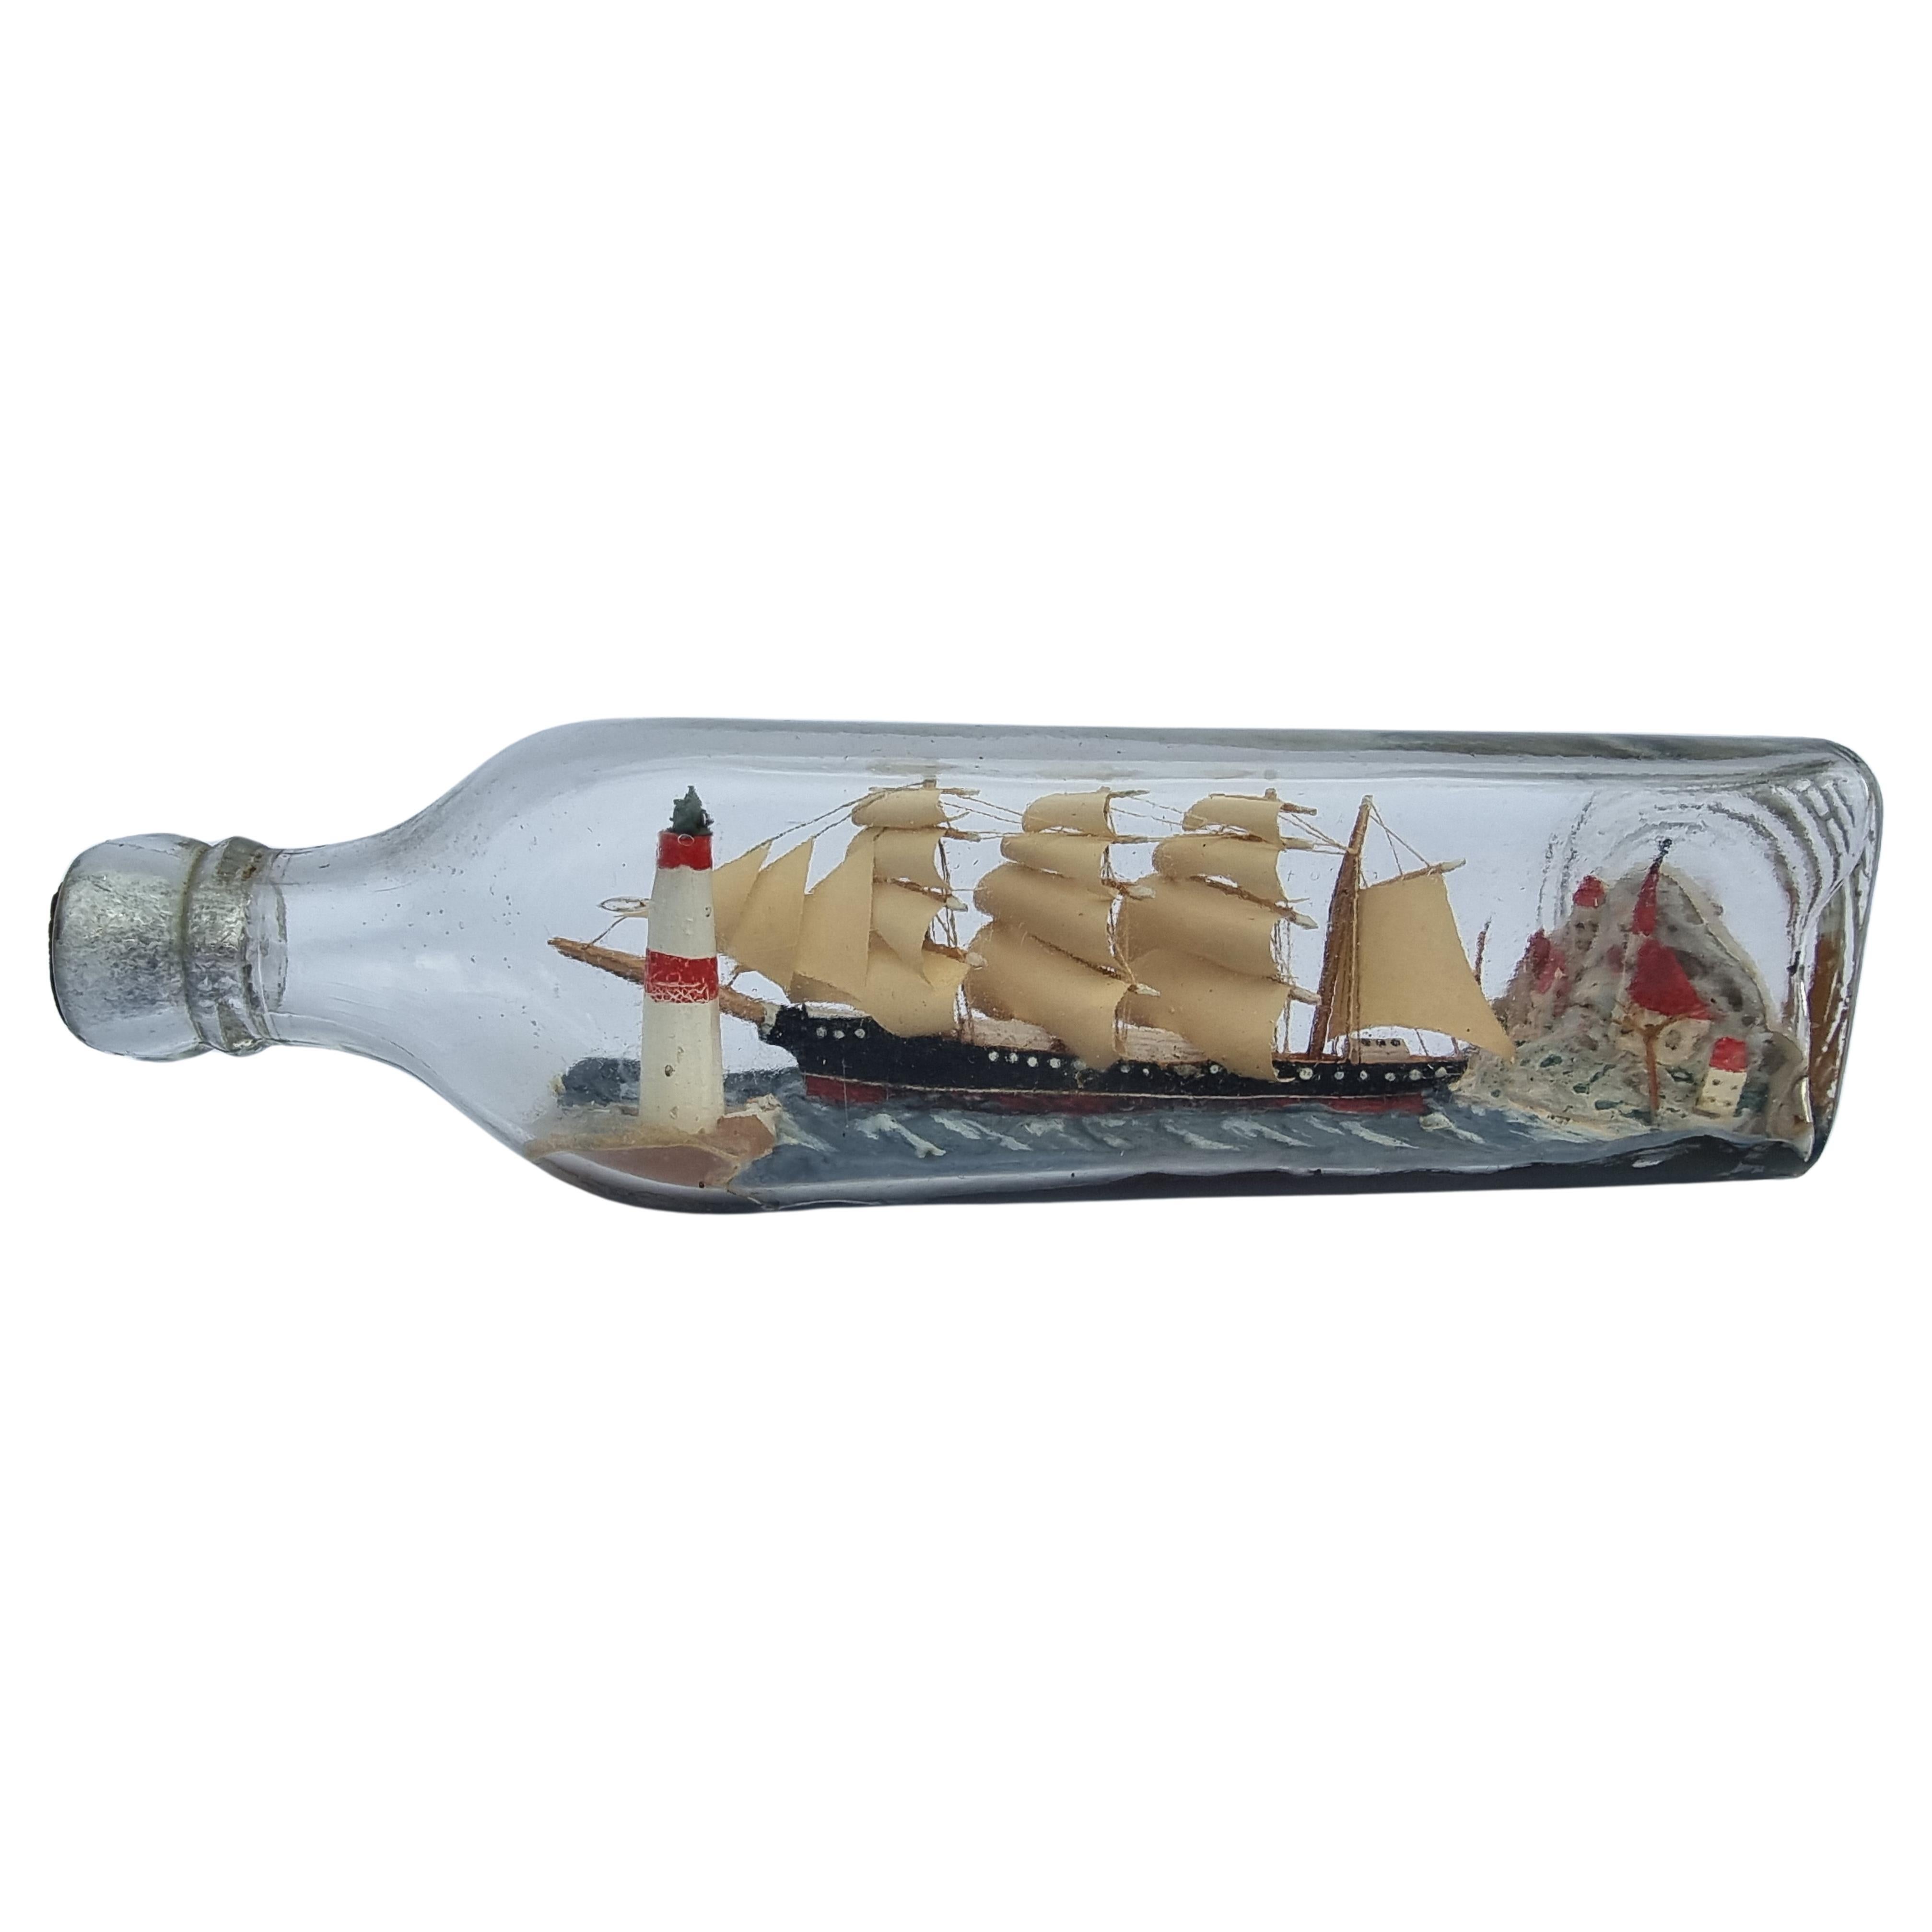 A four mast 18th century ship in a bottle, English folk art circa 1920